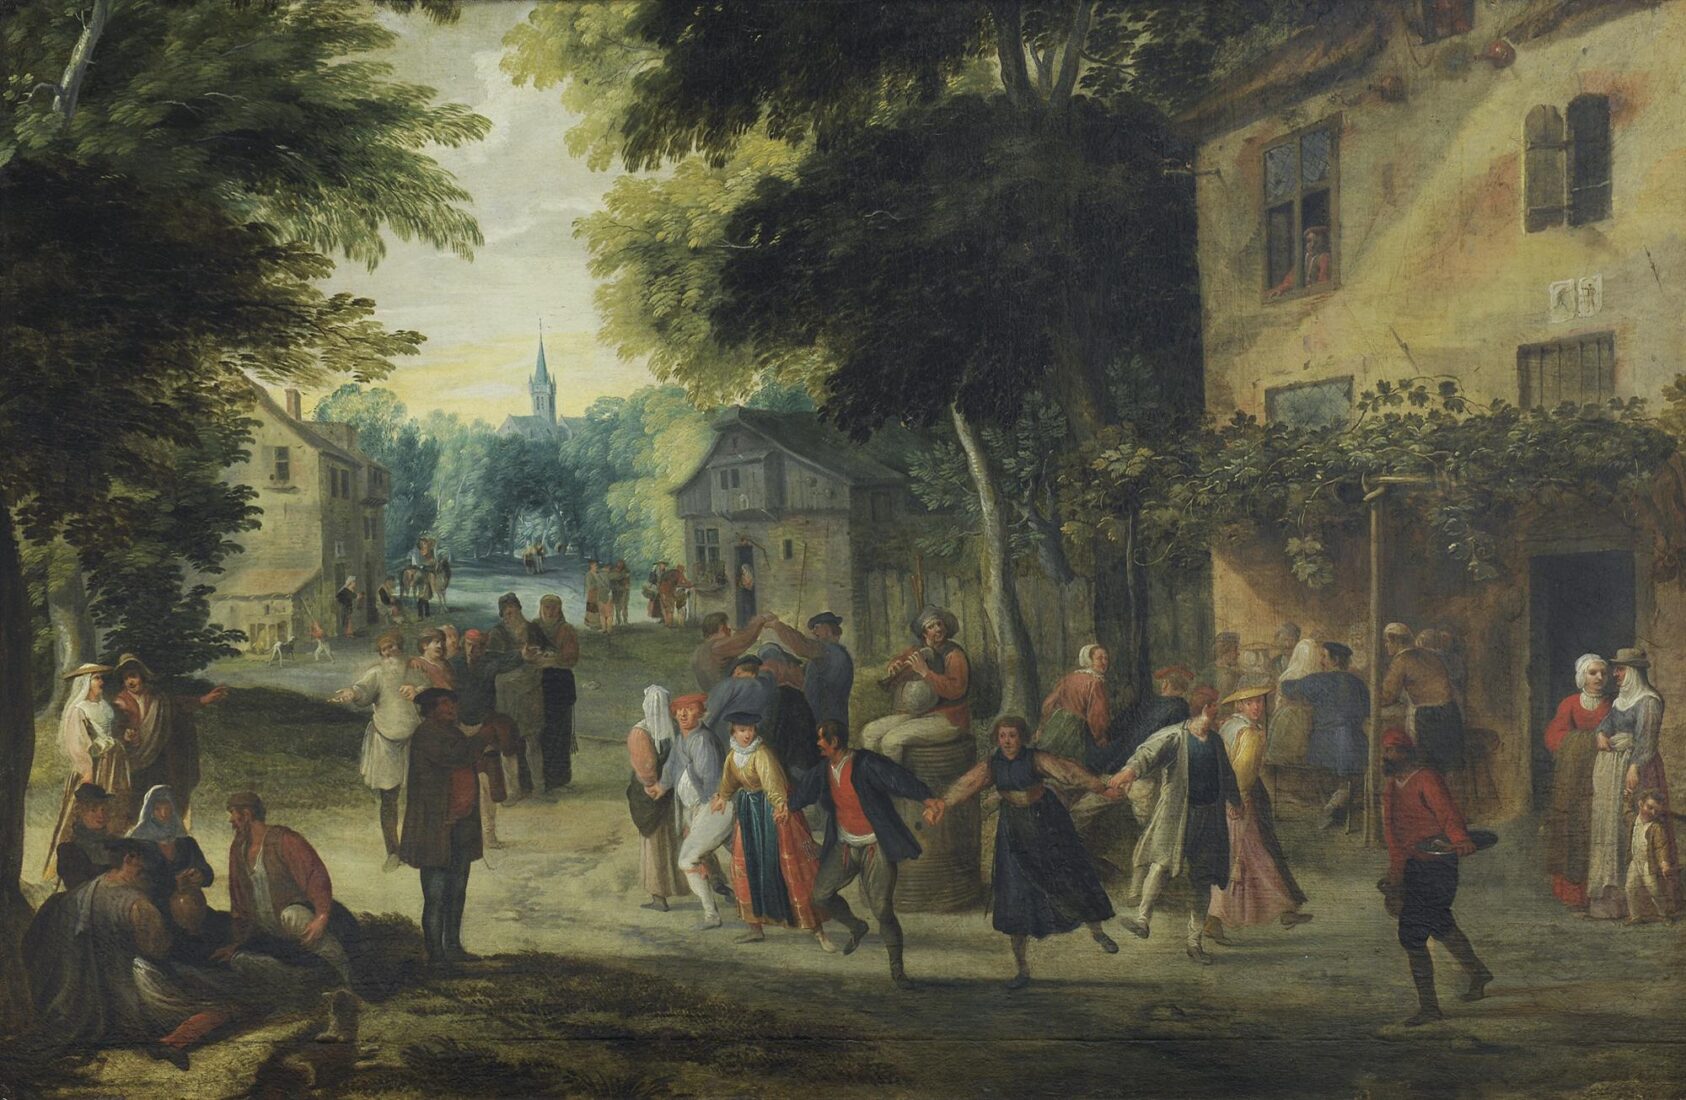 Landscape with Dancing Peasants